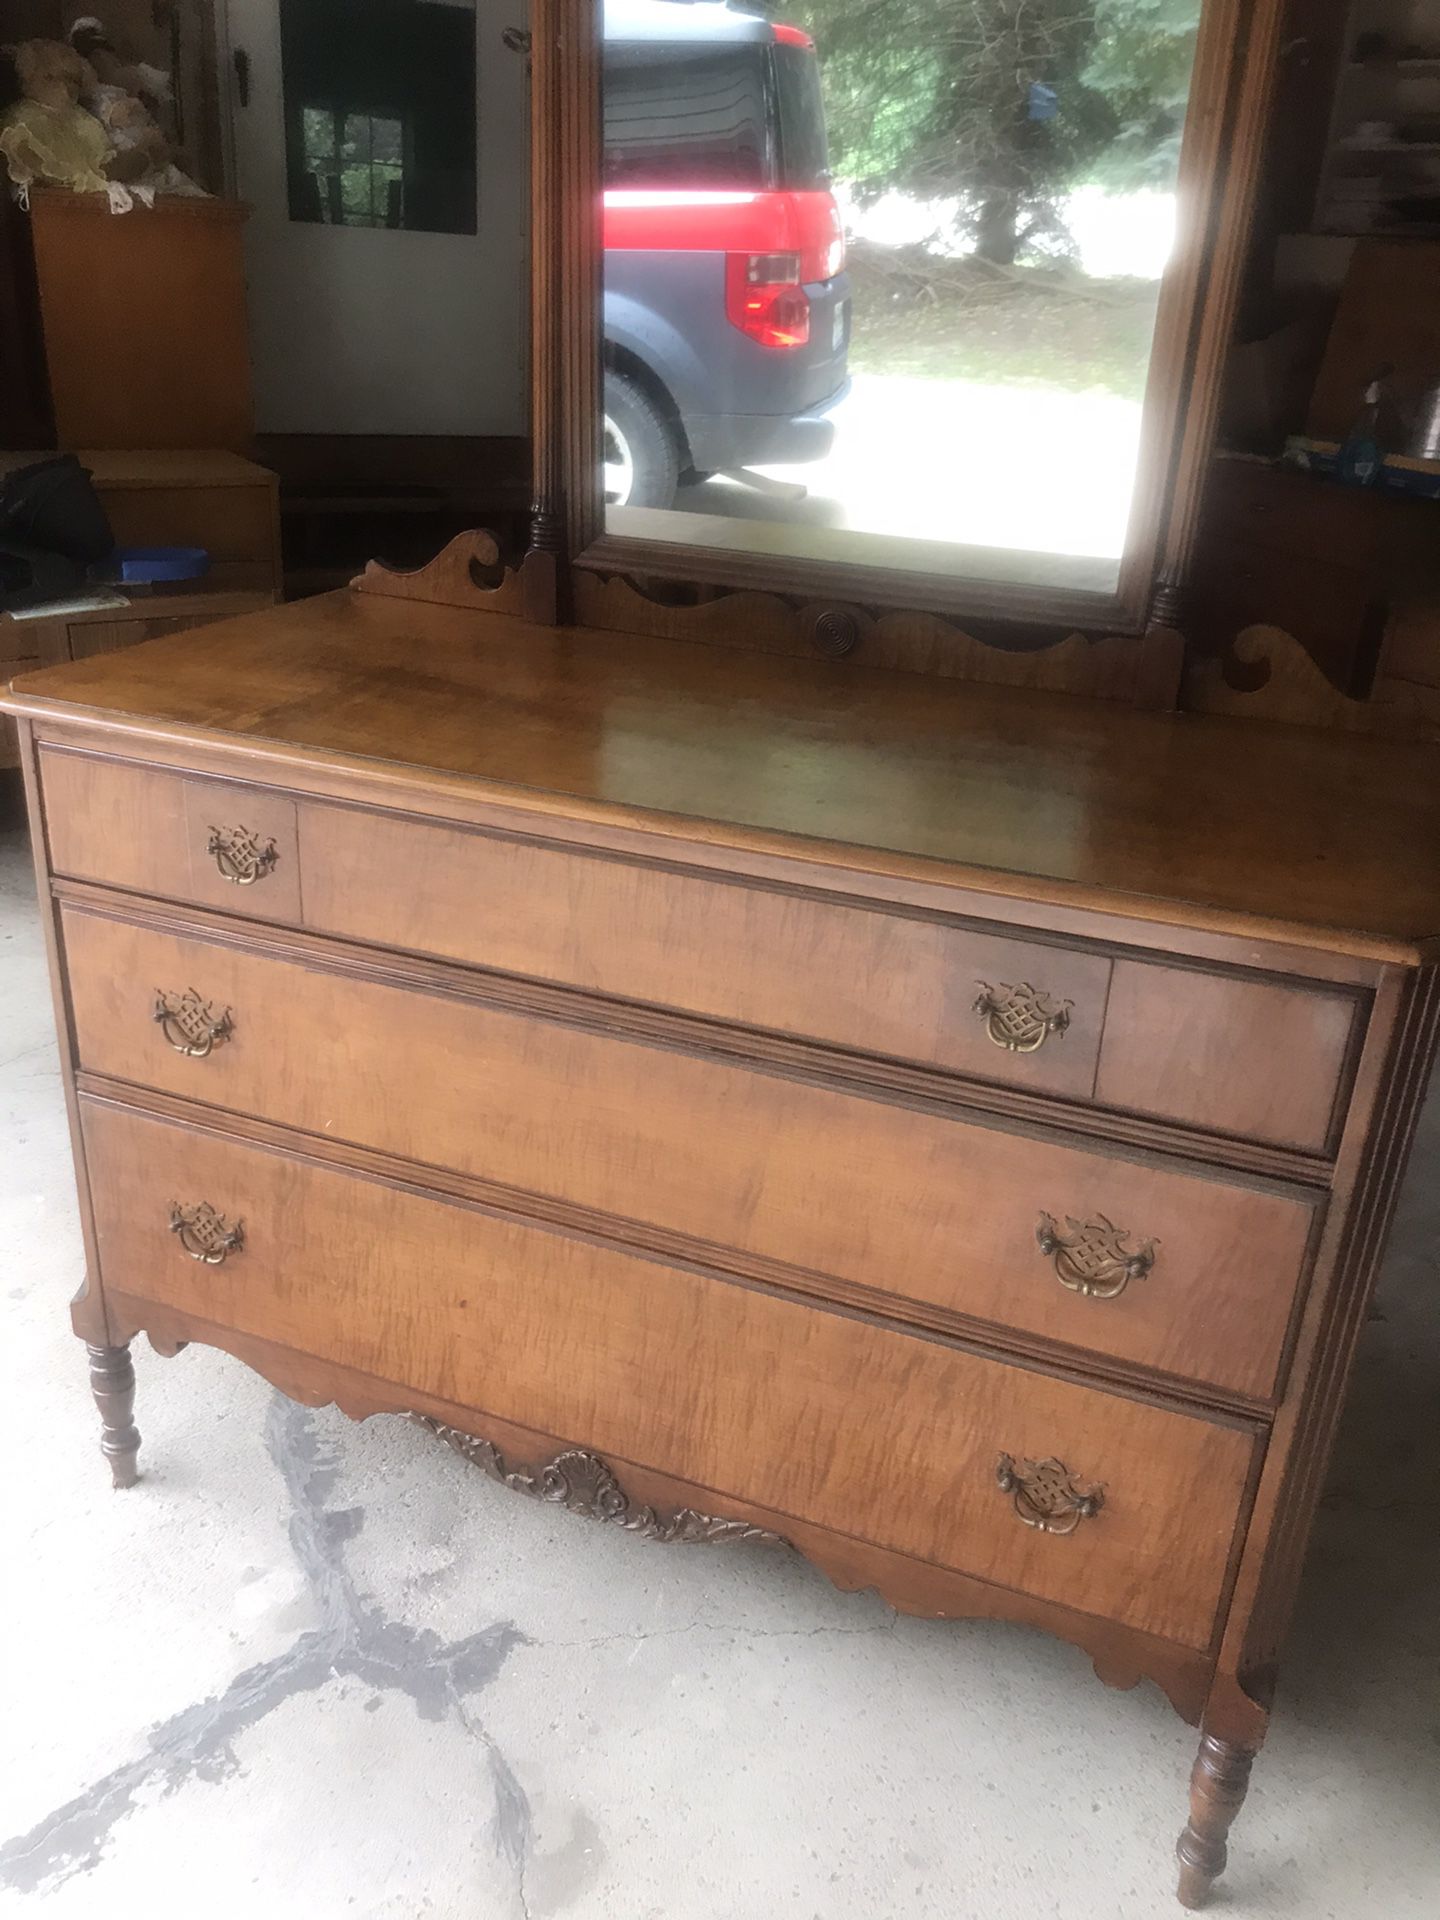 Very nice antique three drawer dresser